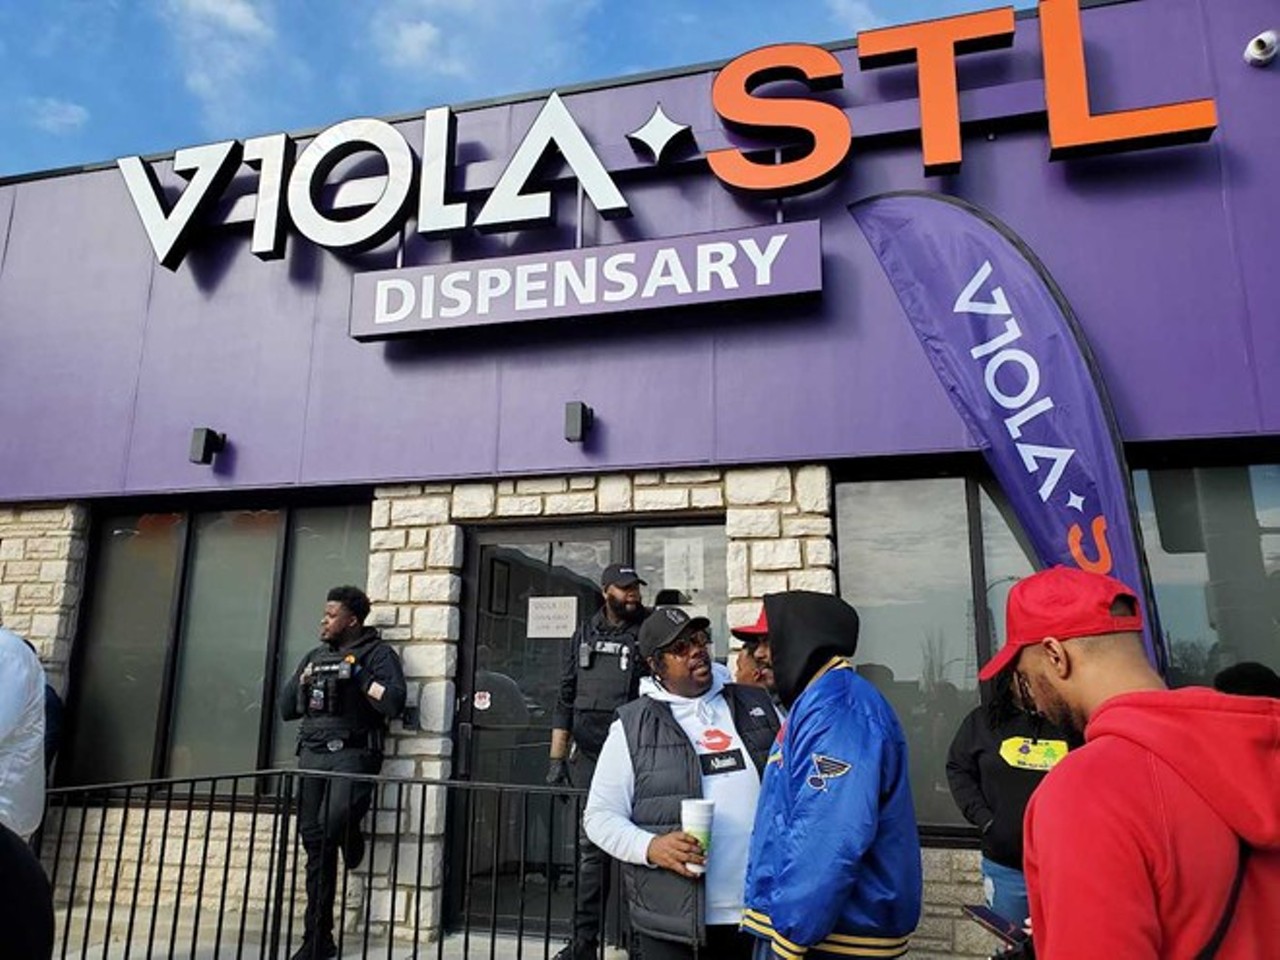 Viola STL dispensary